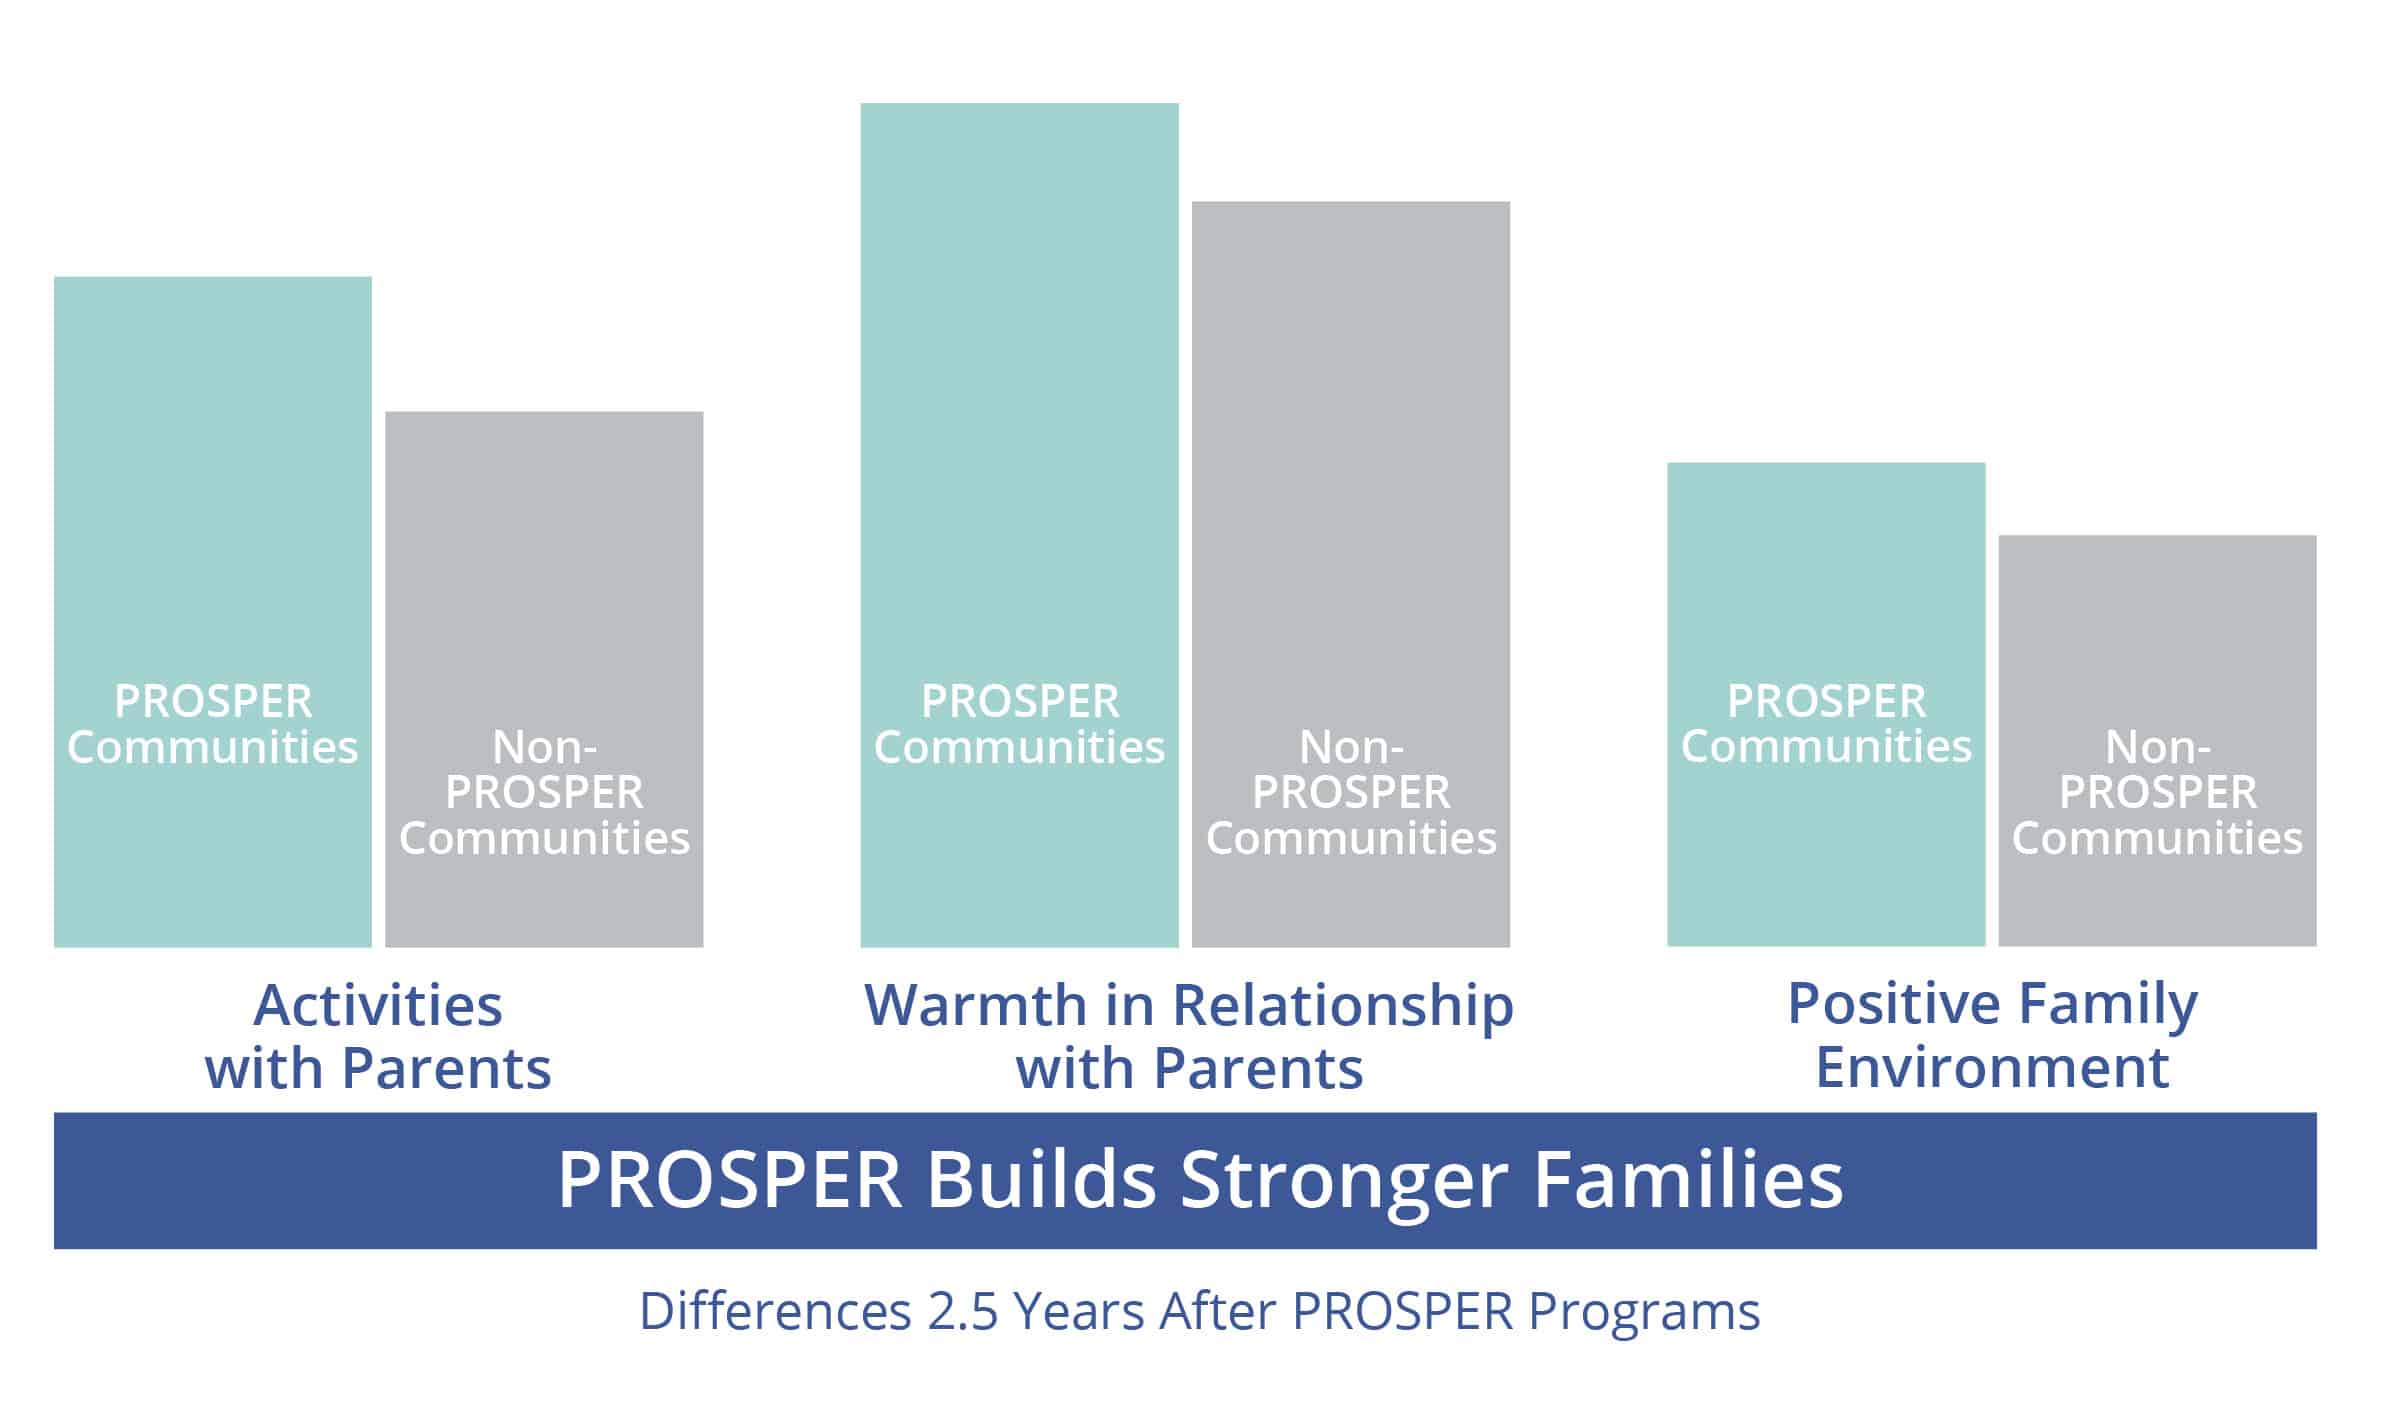 Prosper buikds stronger families evidence graphic